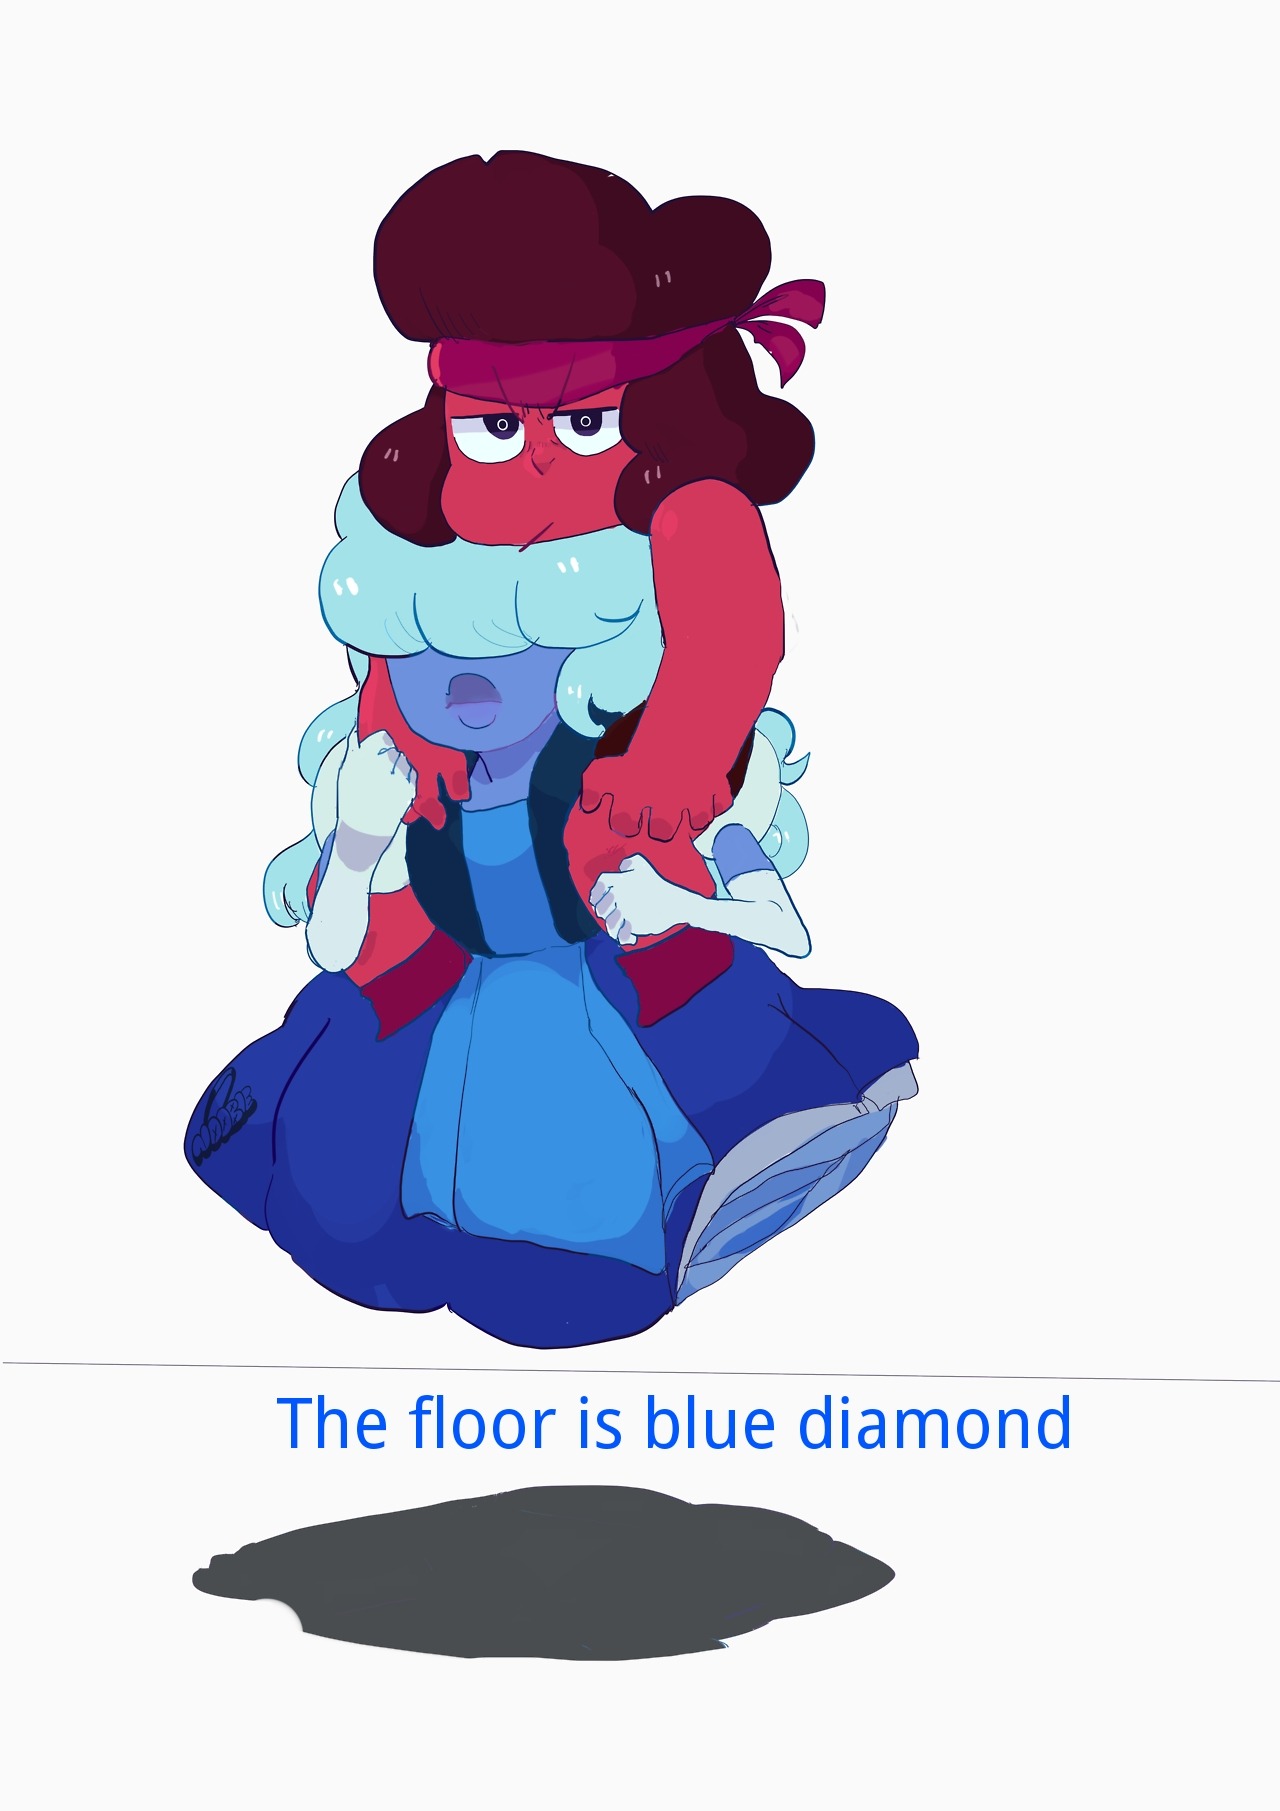 The floor is blue diamond